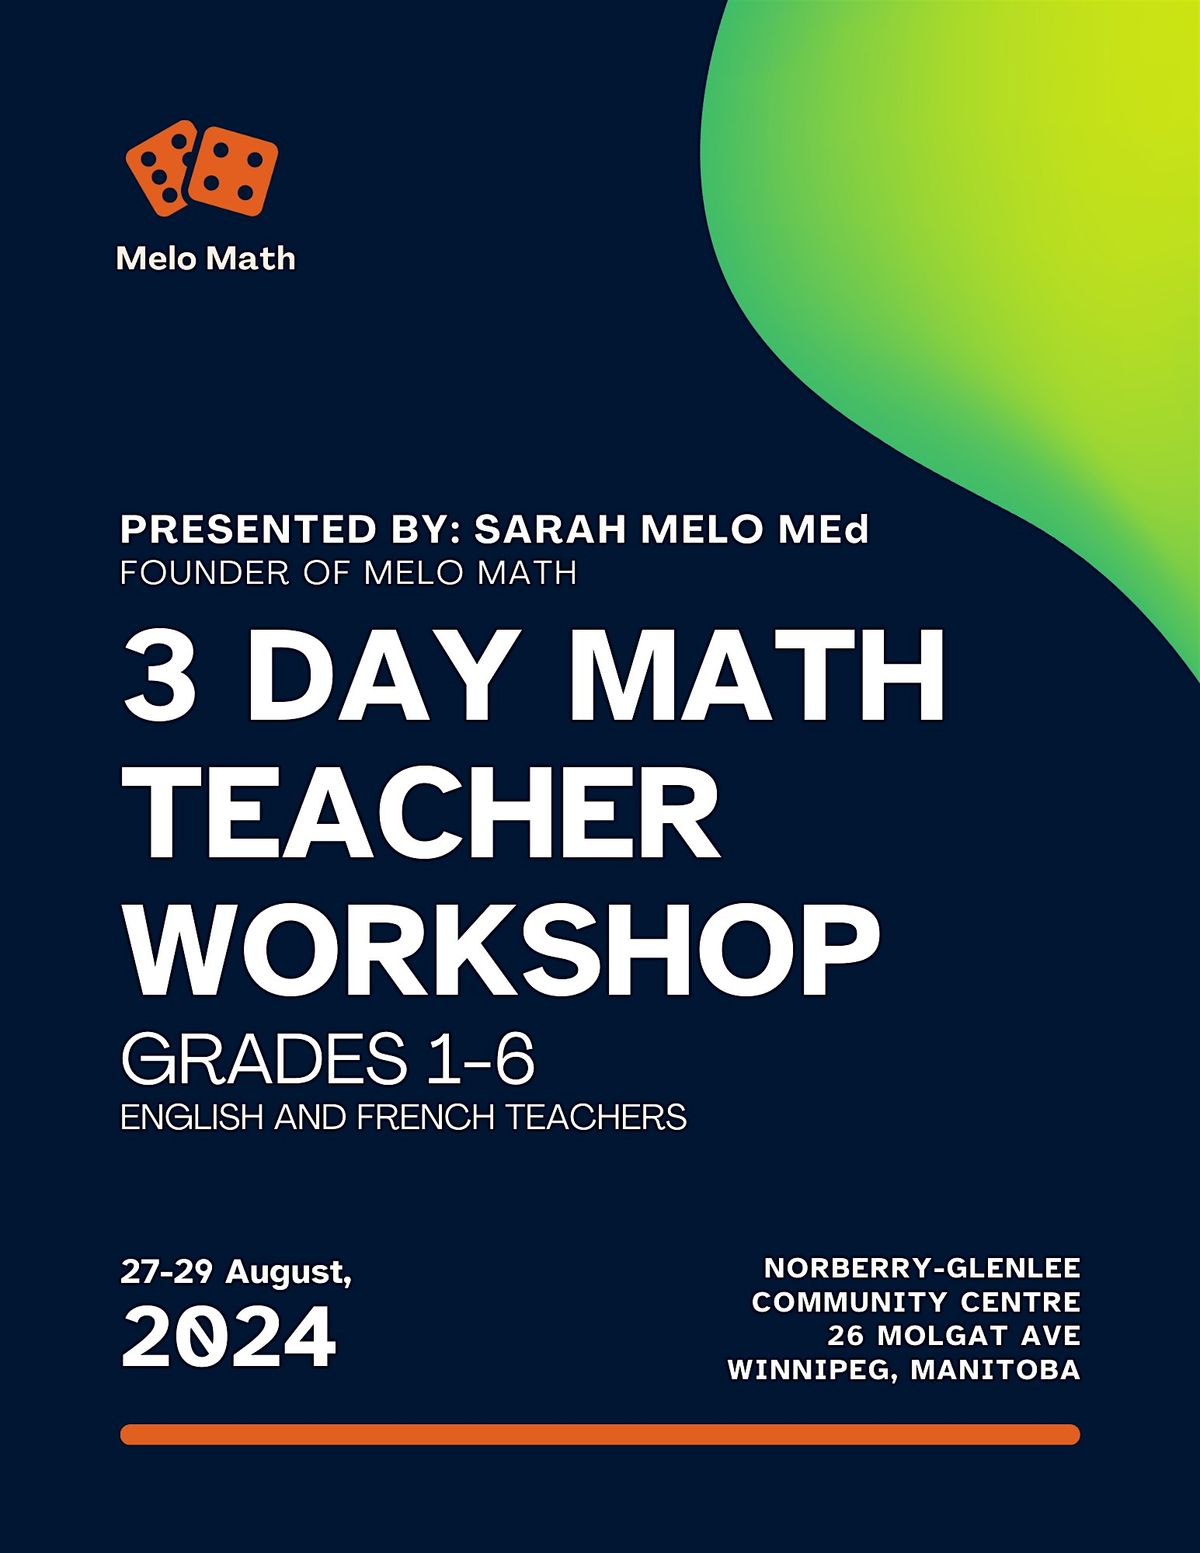 Aug 27-29, 2024: 3 DAY MATH TEACHER WORKSHOP